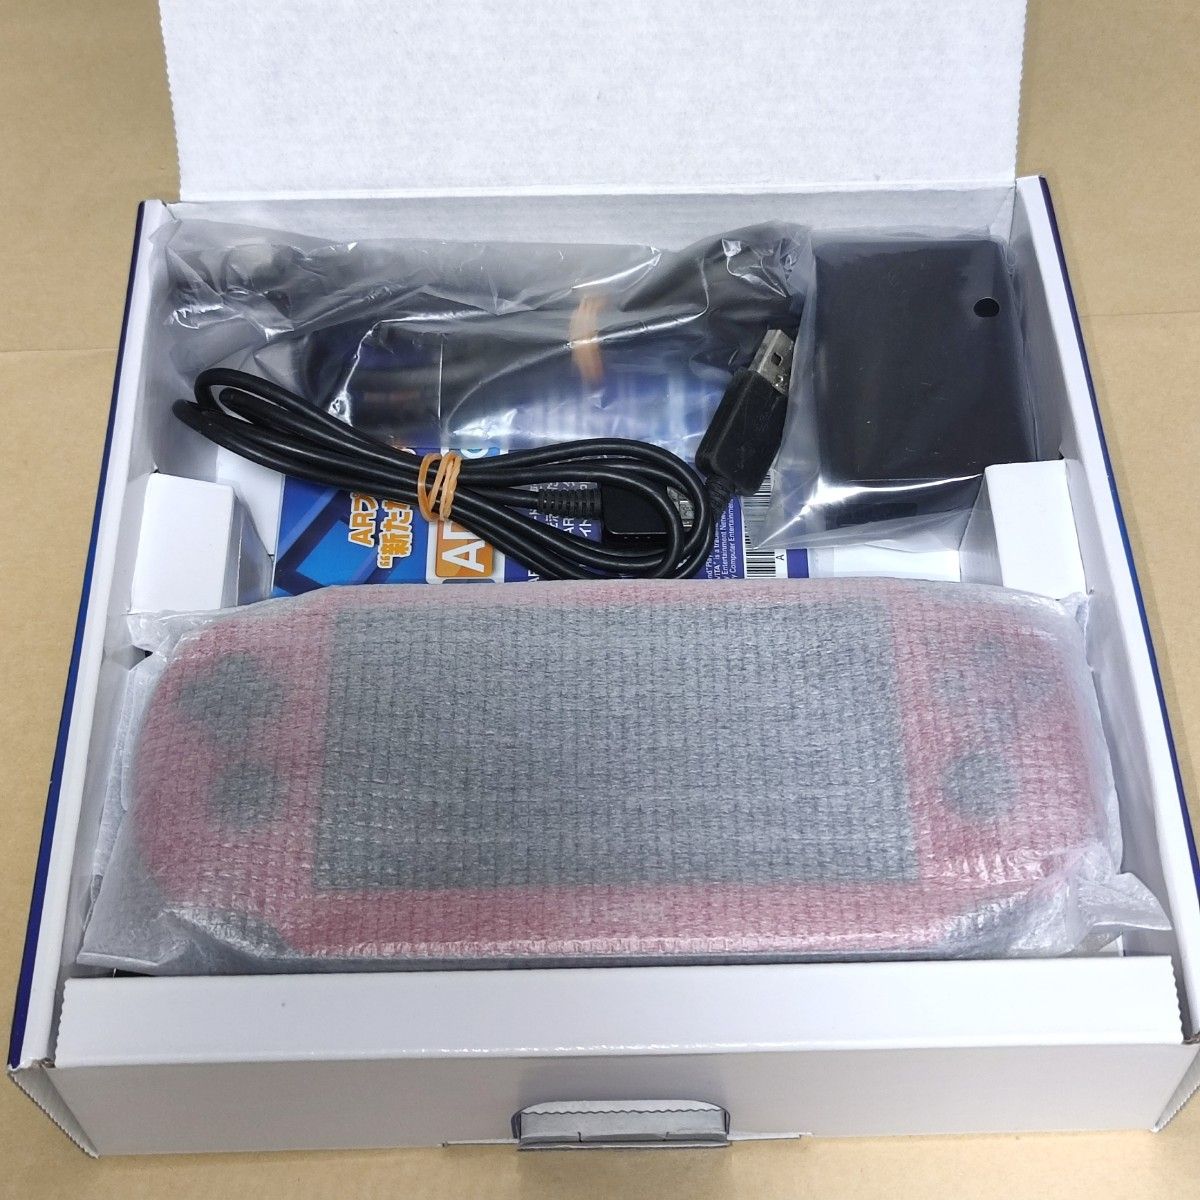 PS Vita 本体 Wi-Fiモデル コズミック・レッド (PCH-1000 ZA03) PlayStation 有機EL